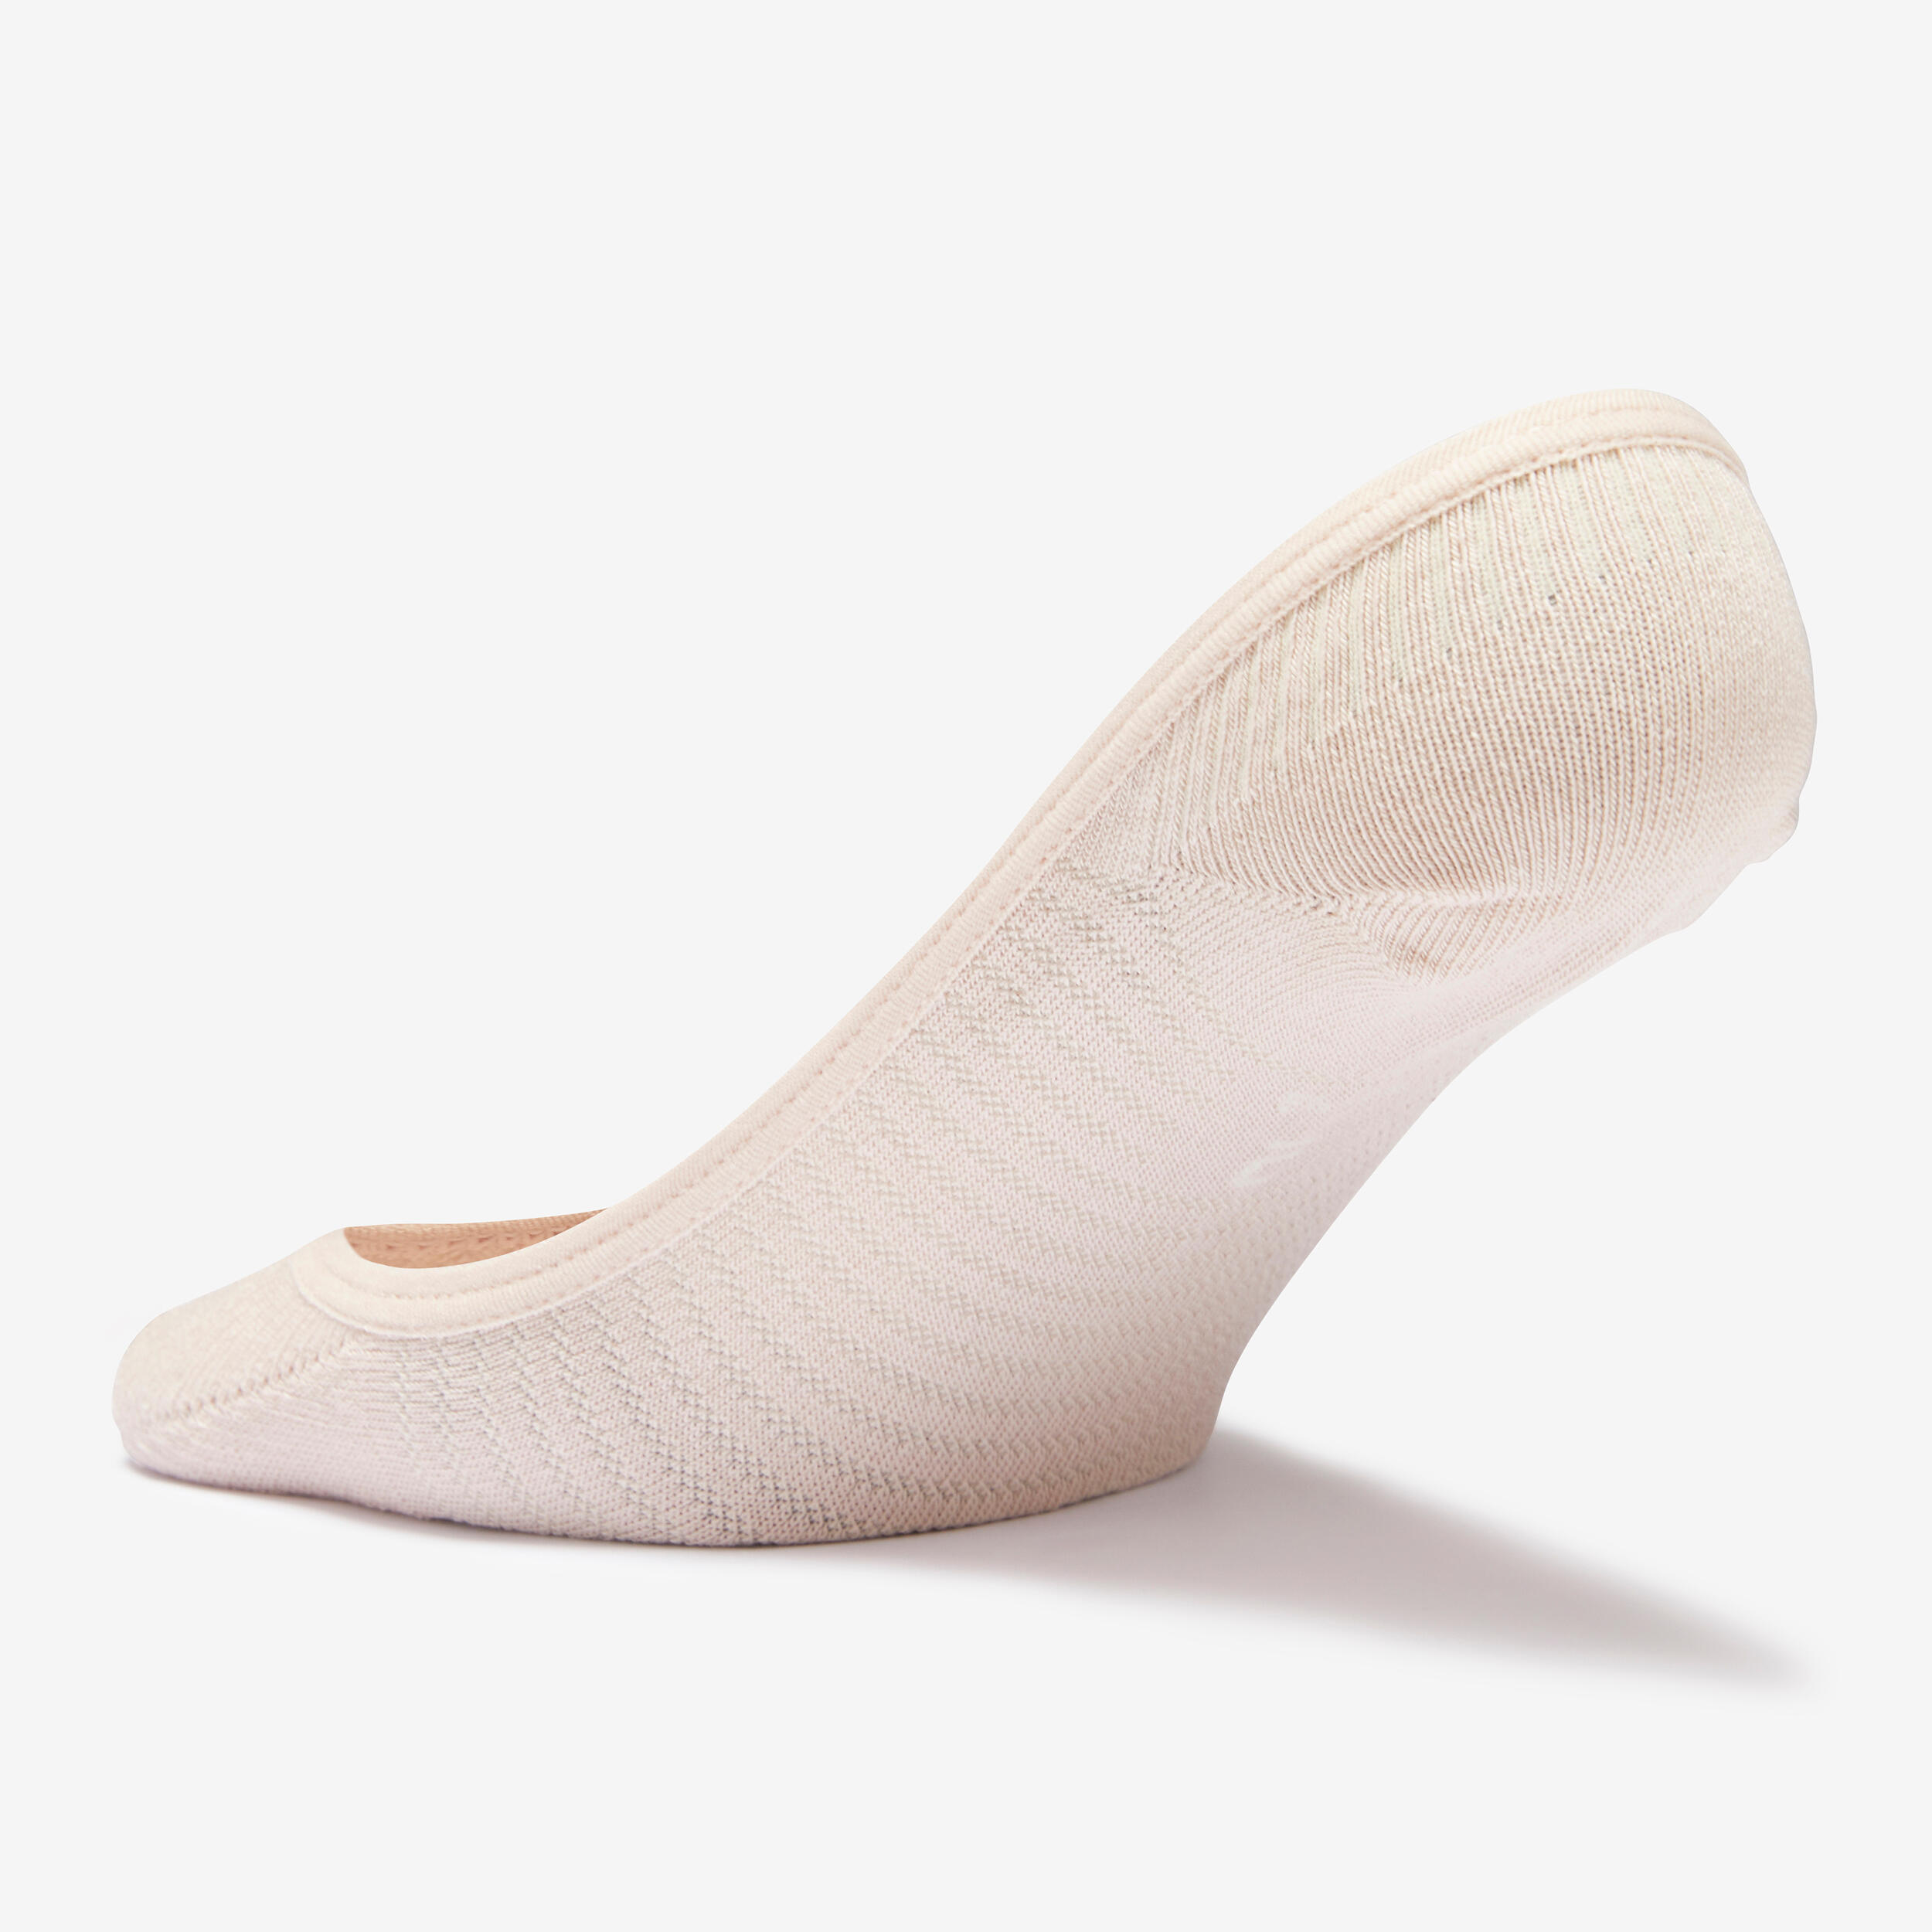 Low Ballerina Socks - Deocell URBAN WALK pack of 2 pairs - beige nude 3/4